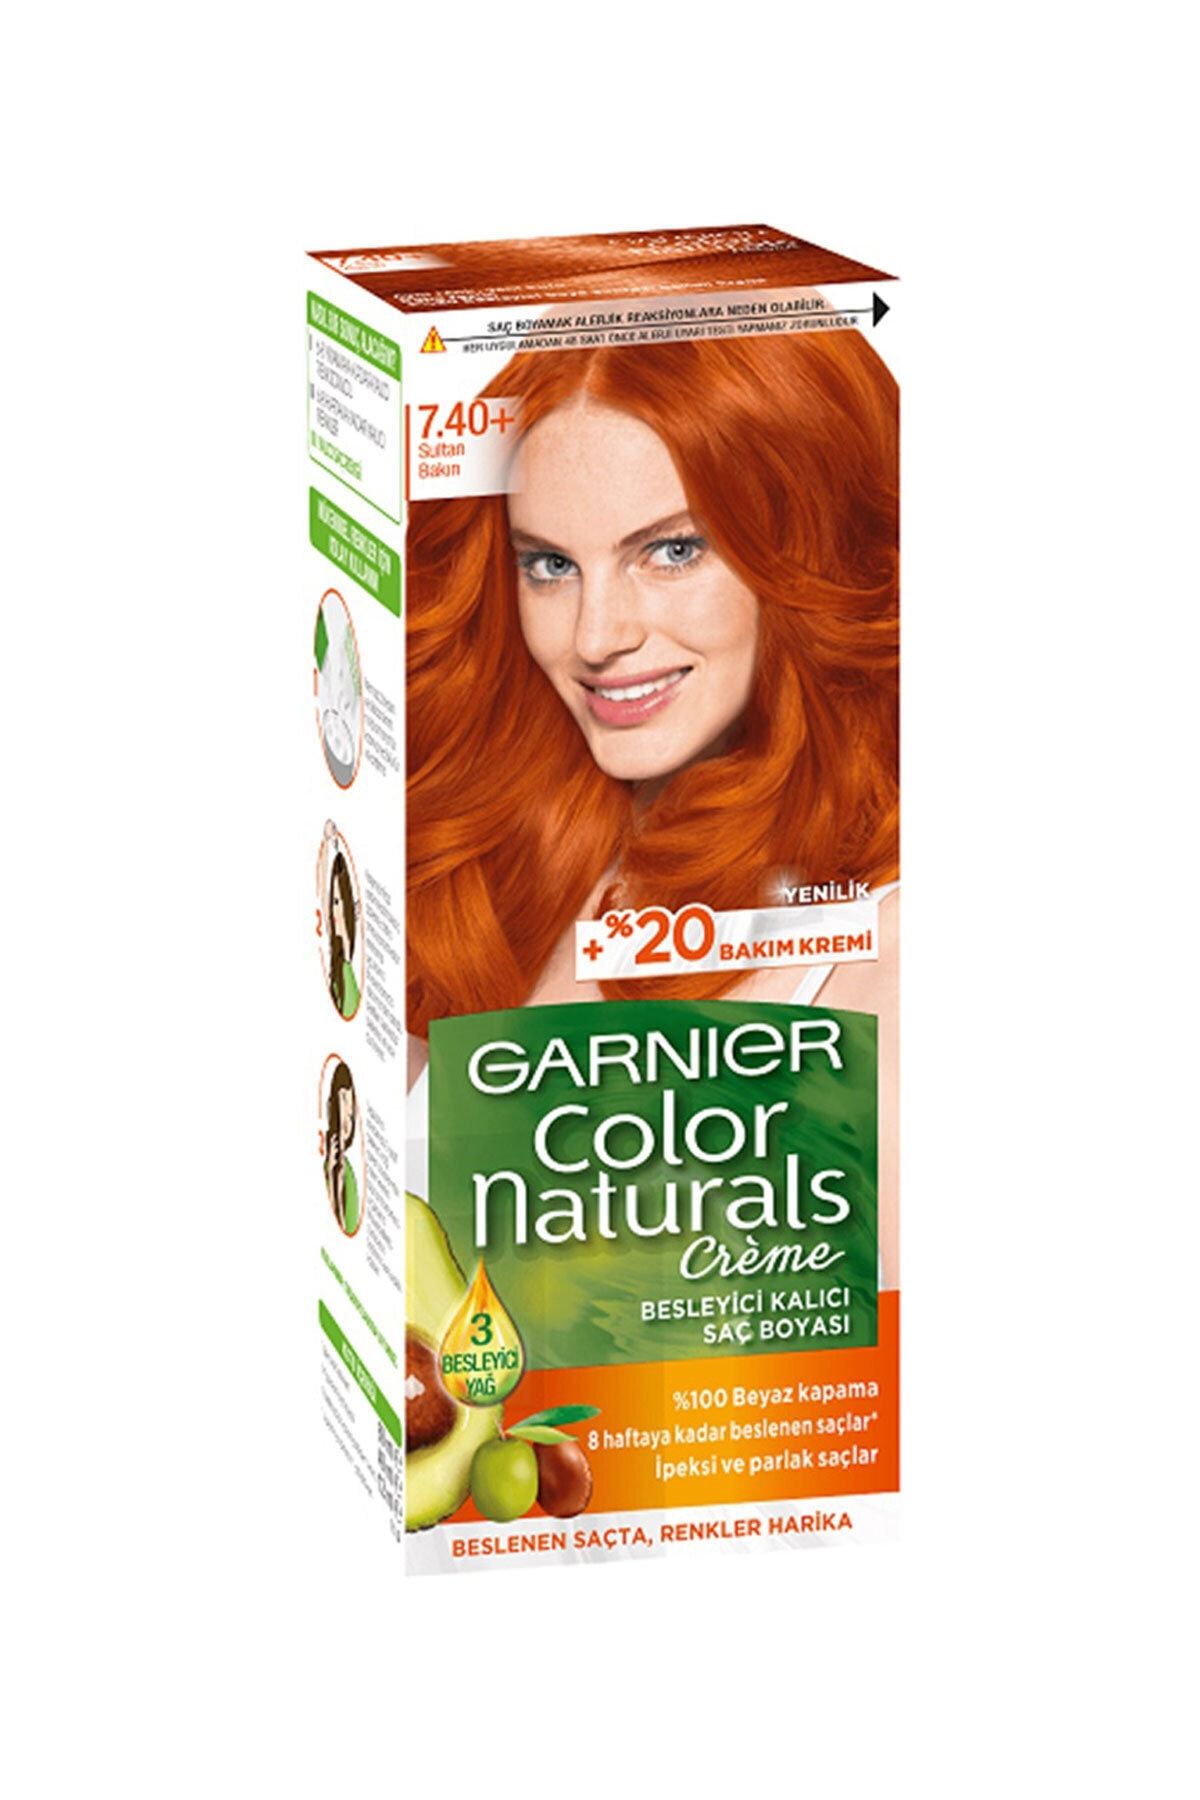 Garnier Color Naturals Sultan Bakırı Saç Boyası No:7.40+